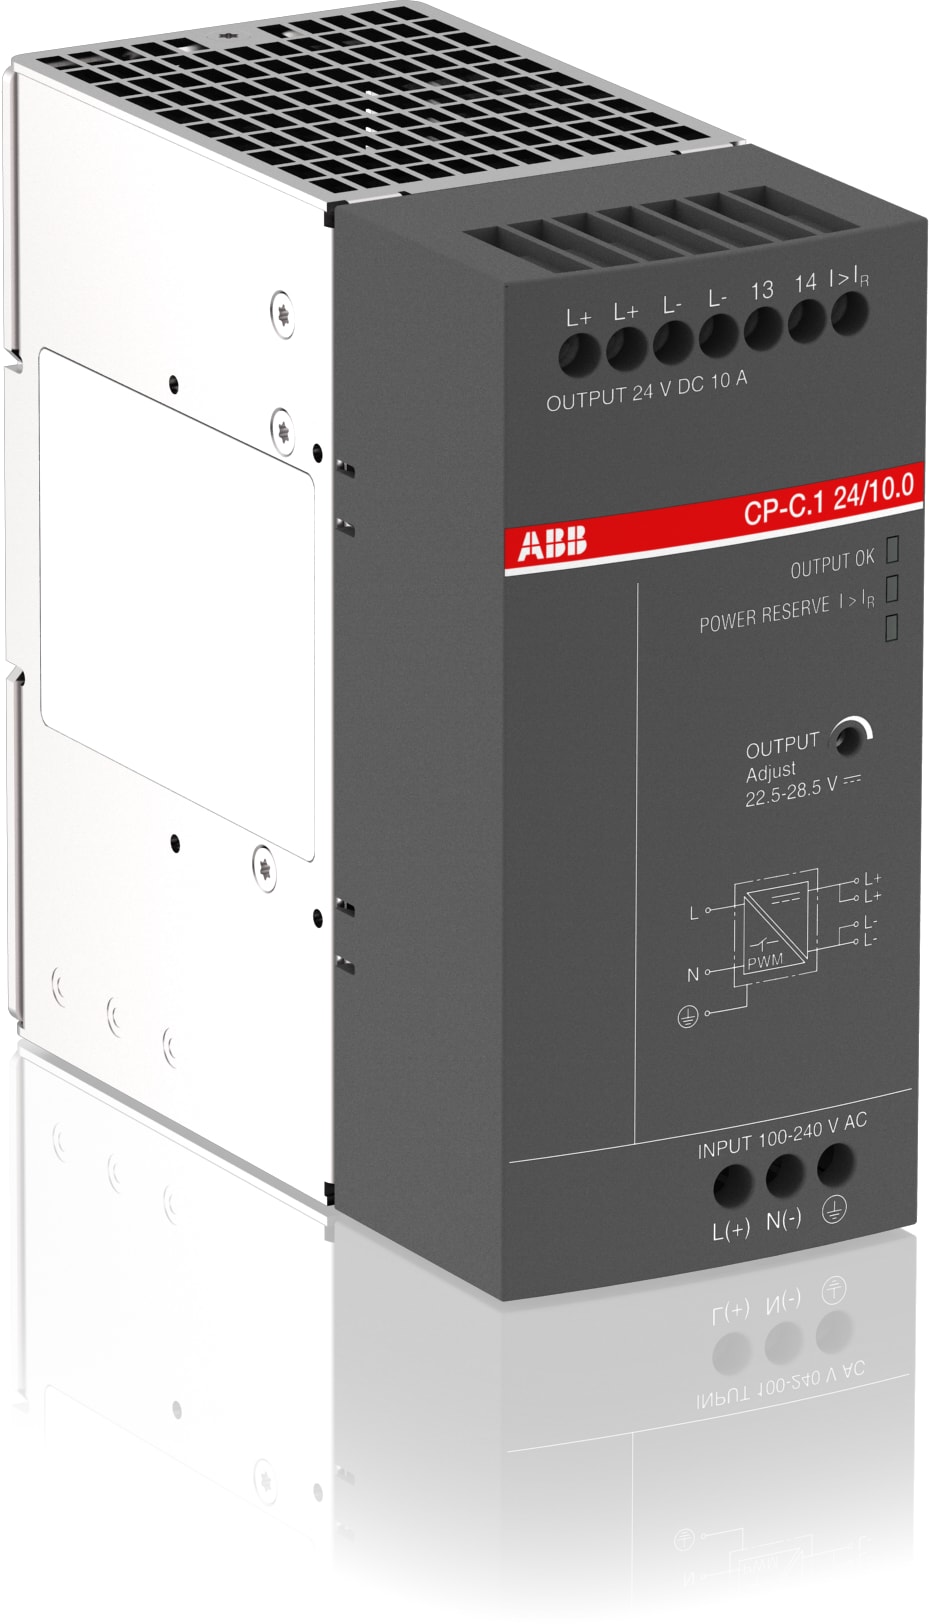 ABB Electrification - CP-C.1 24/10.0 Power supply